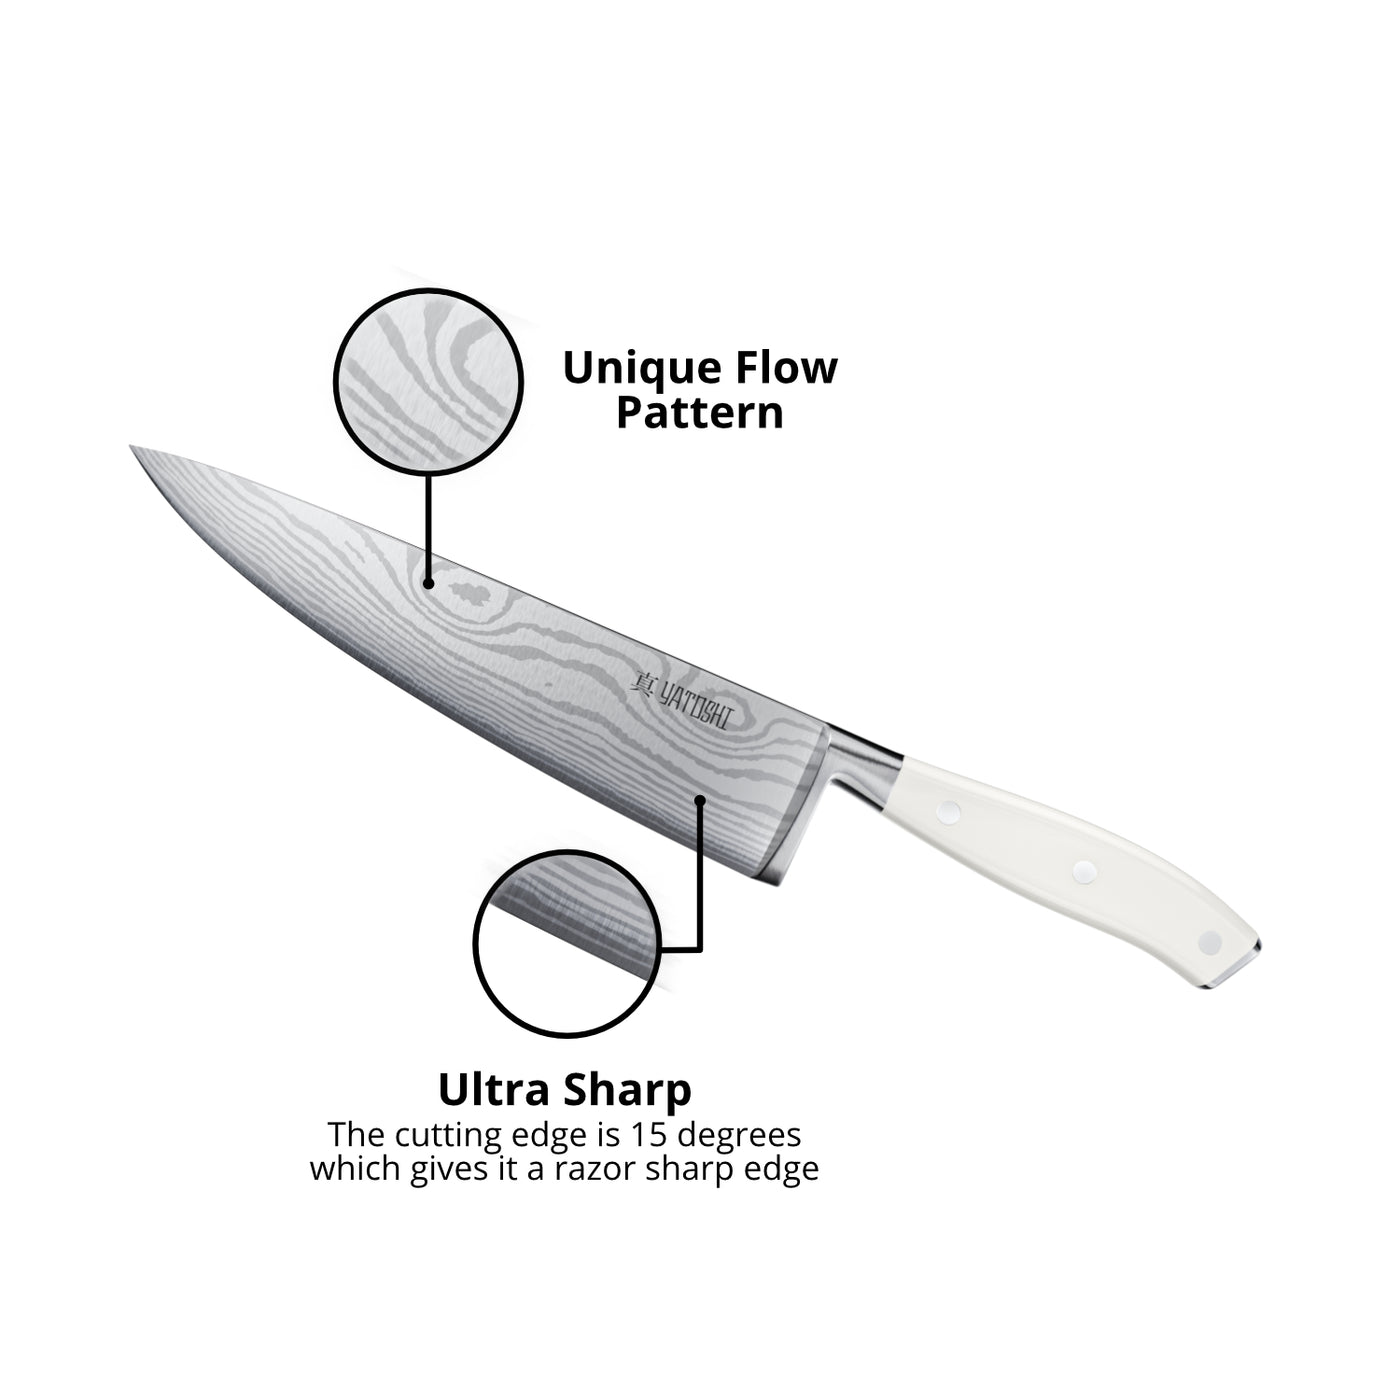 Yatoshi 7 Pcs Knife Block- Pro Kitchen Knife Set Ultra Sharp High